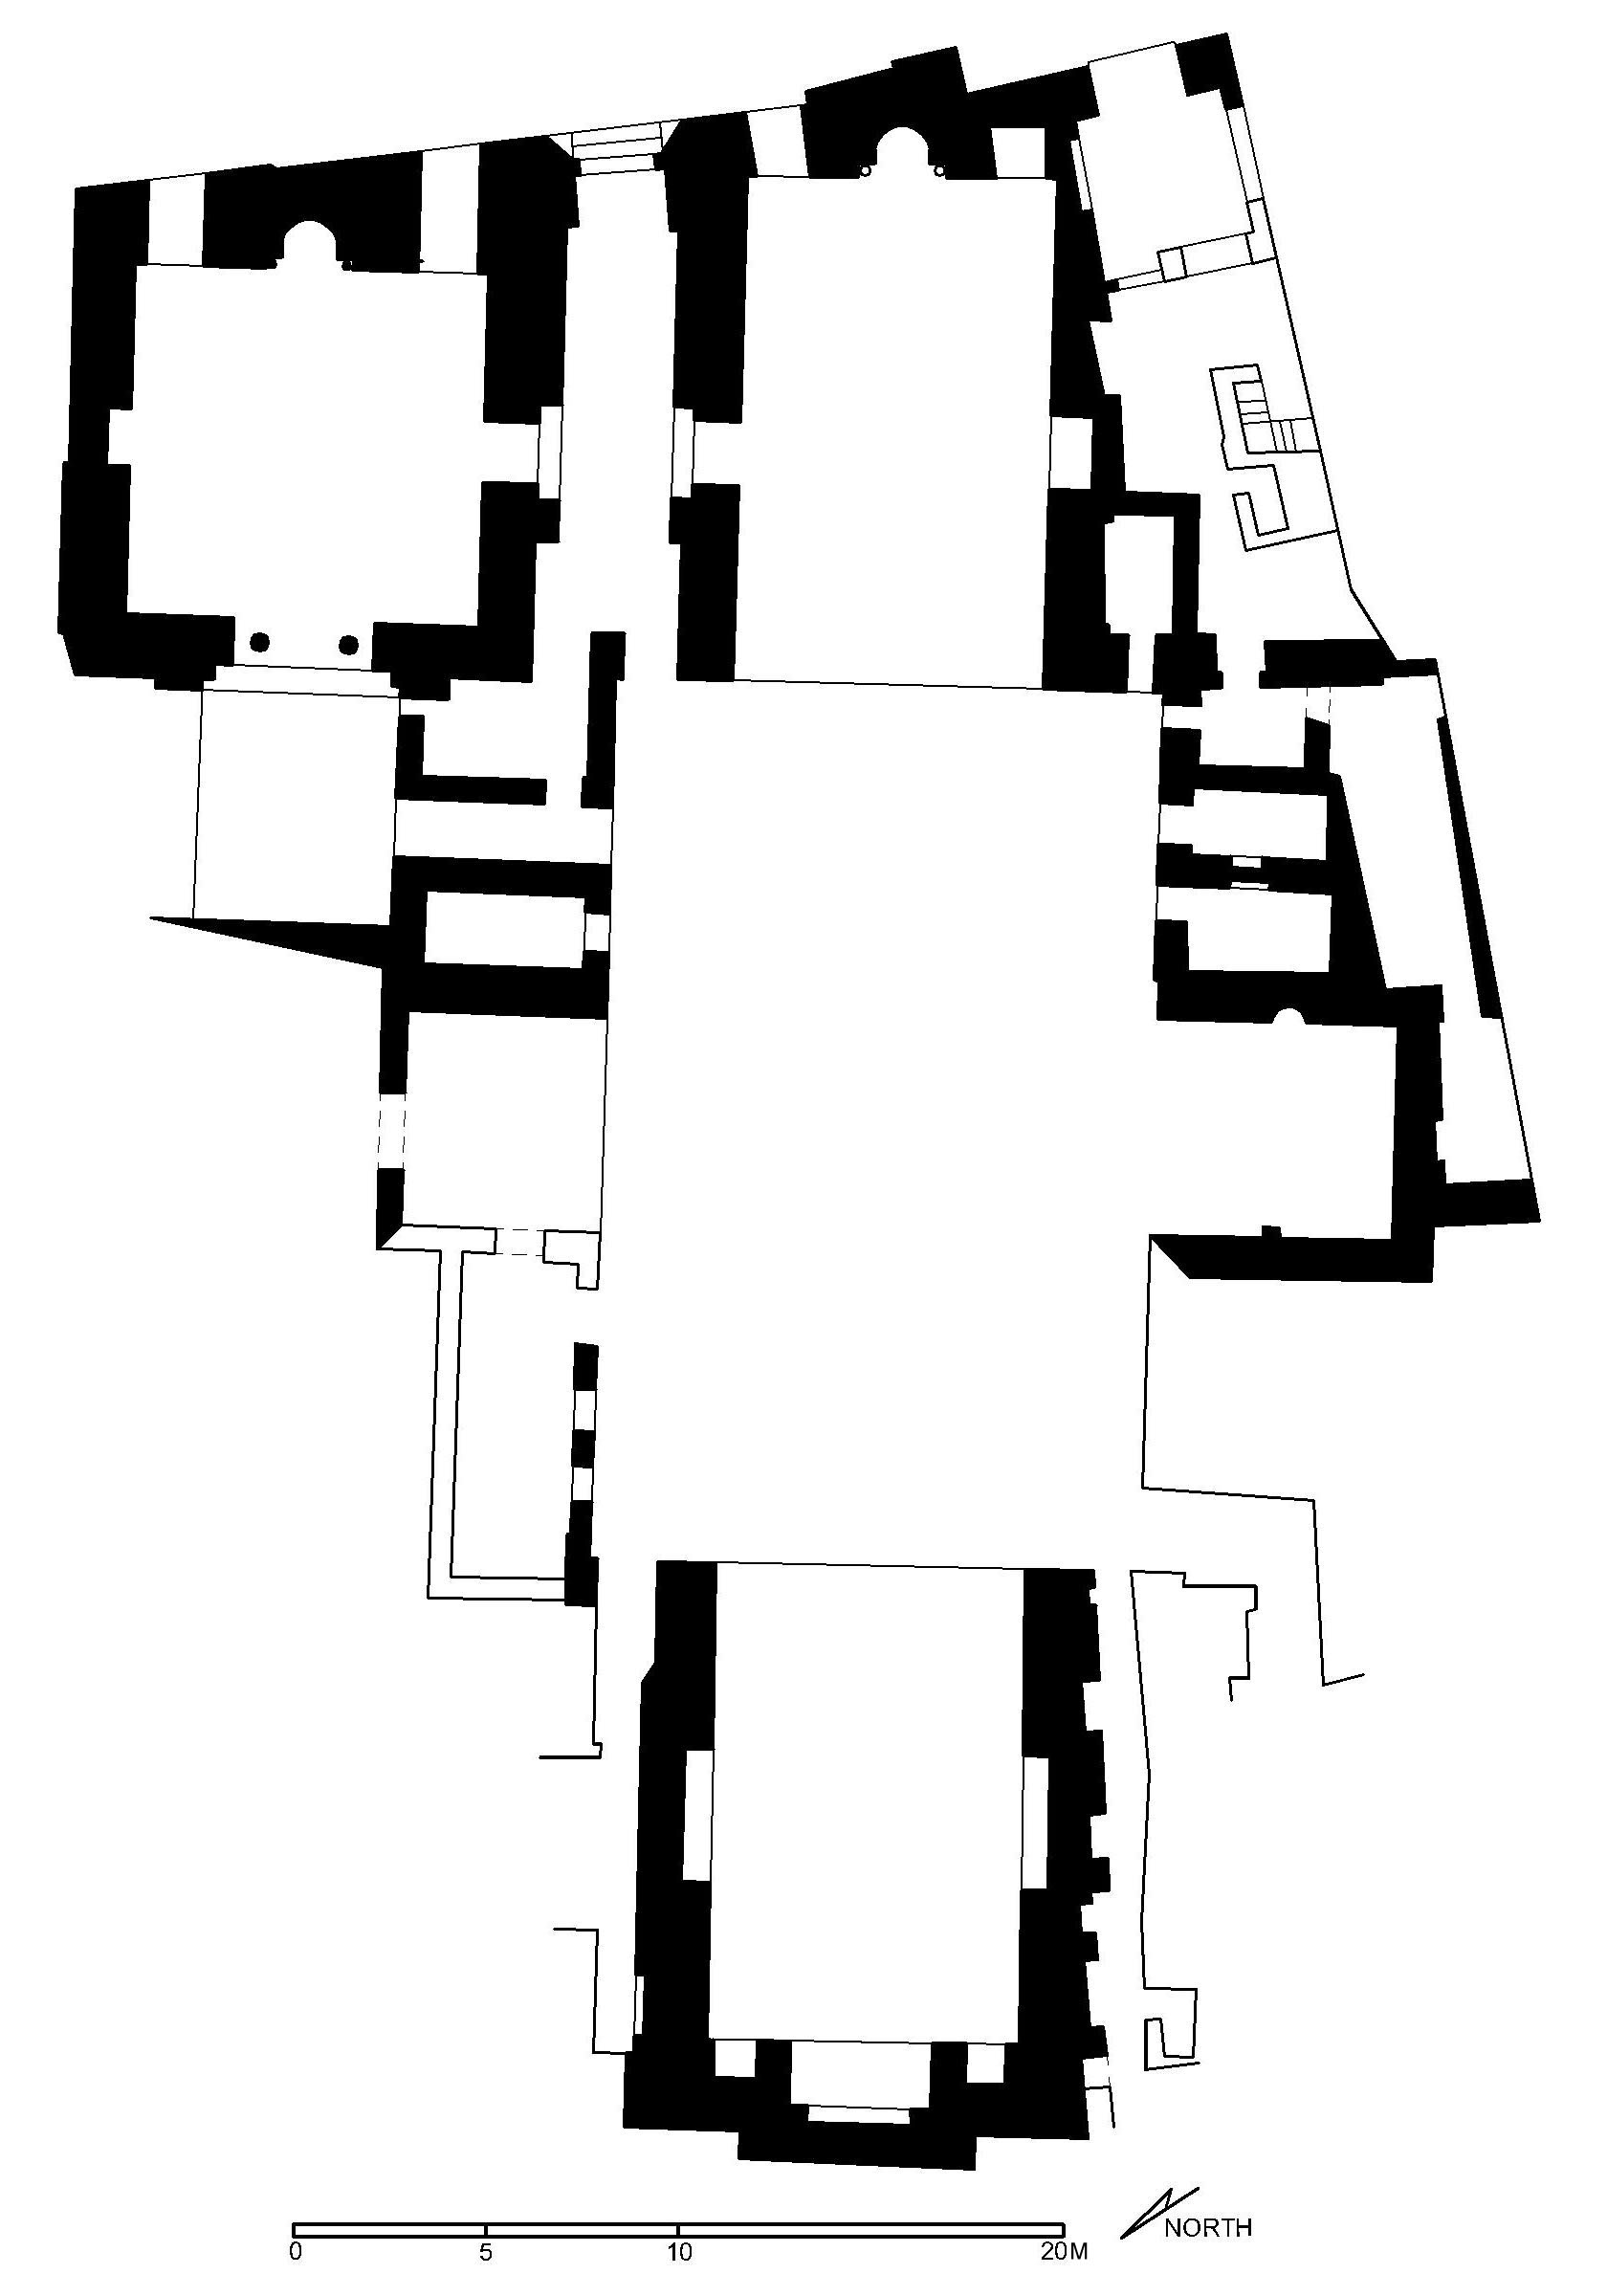 Floor plan of complex (after Meinecke)